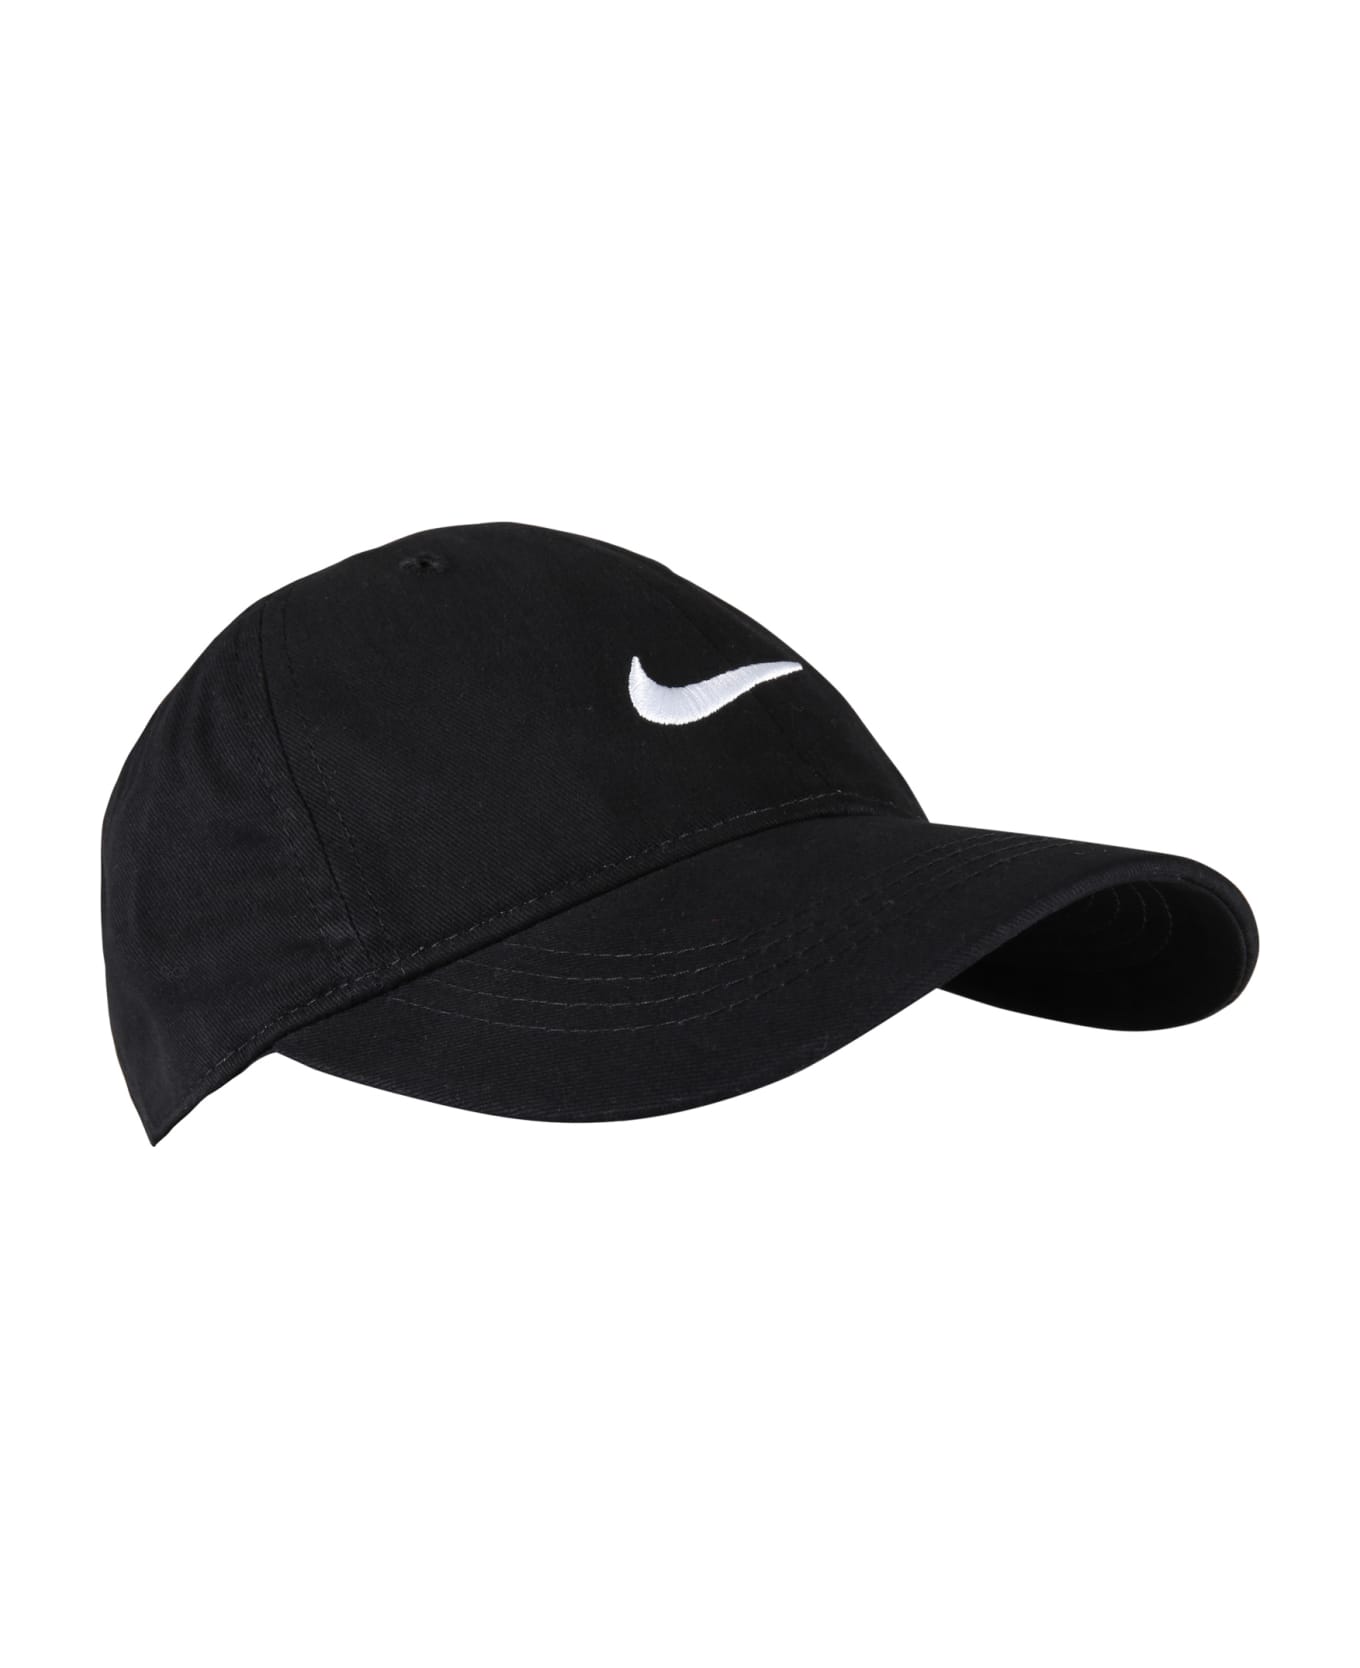 Nike Black Hat For Kids - Black アクセサリー＆ギフト